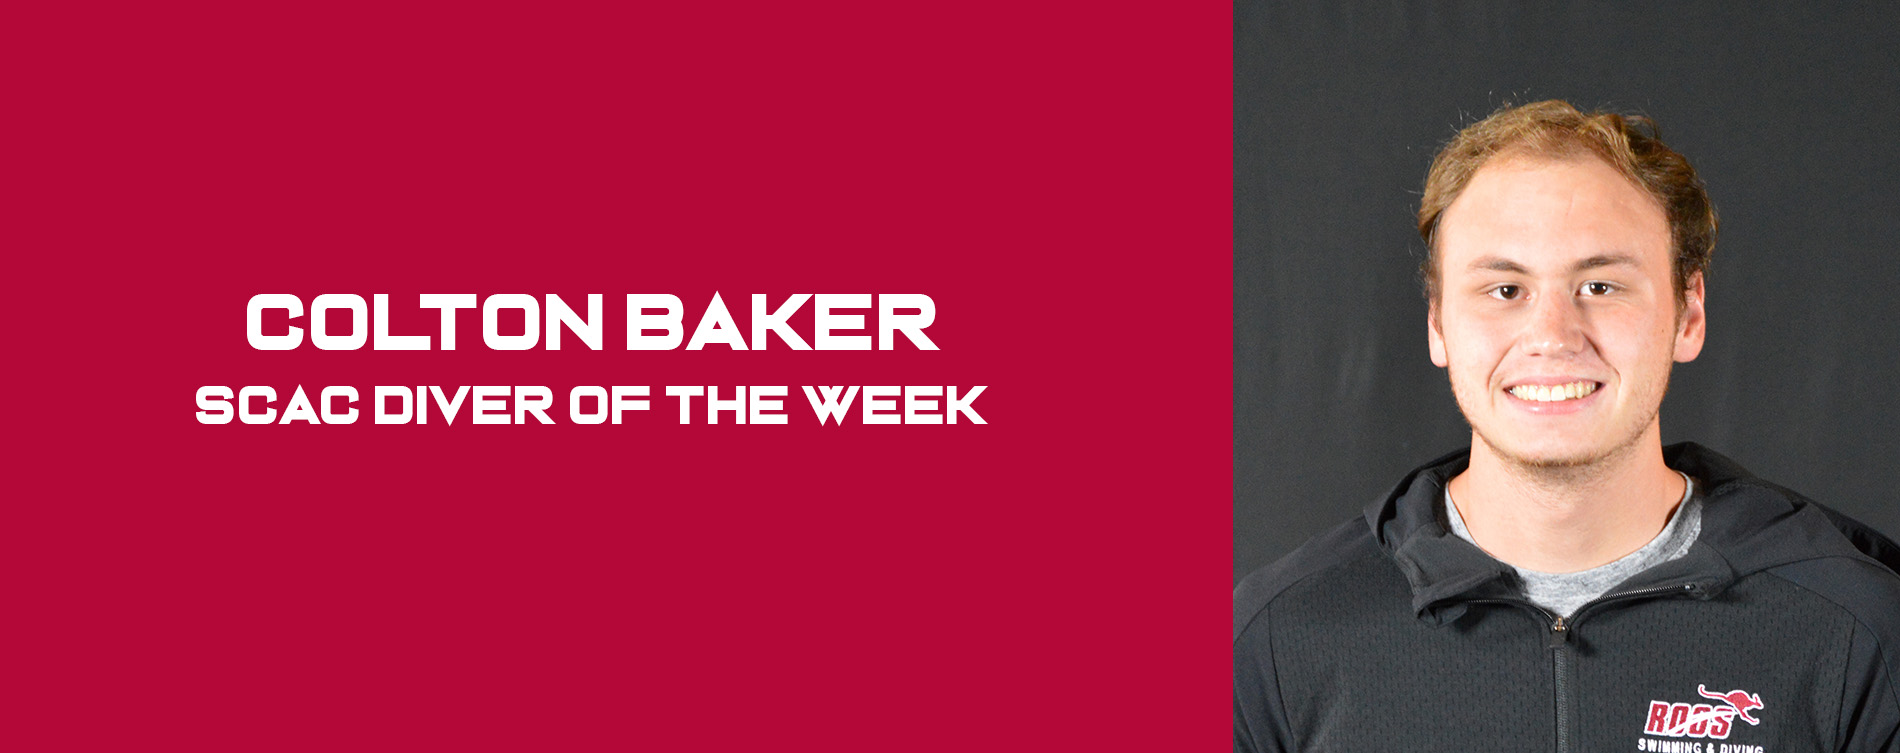 Baker Named SCAC Diver of the Week